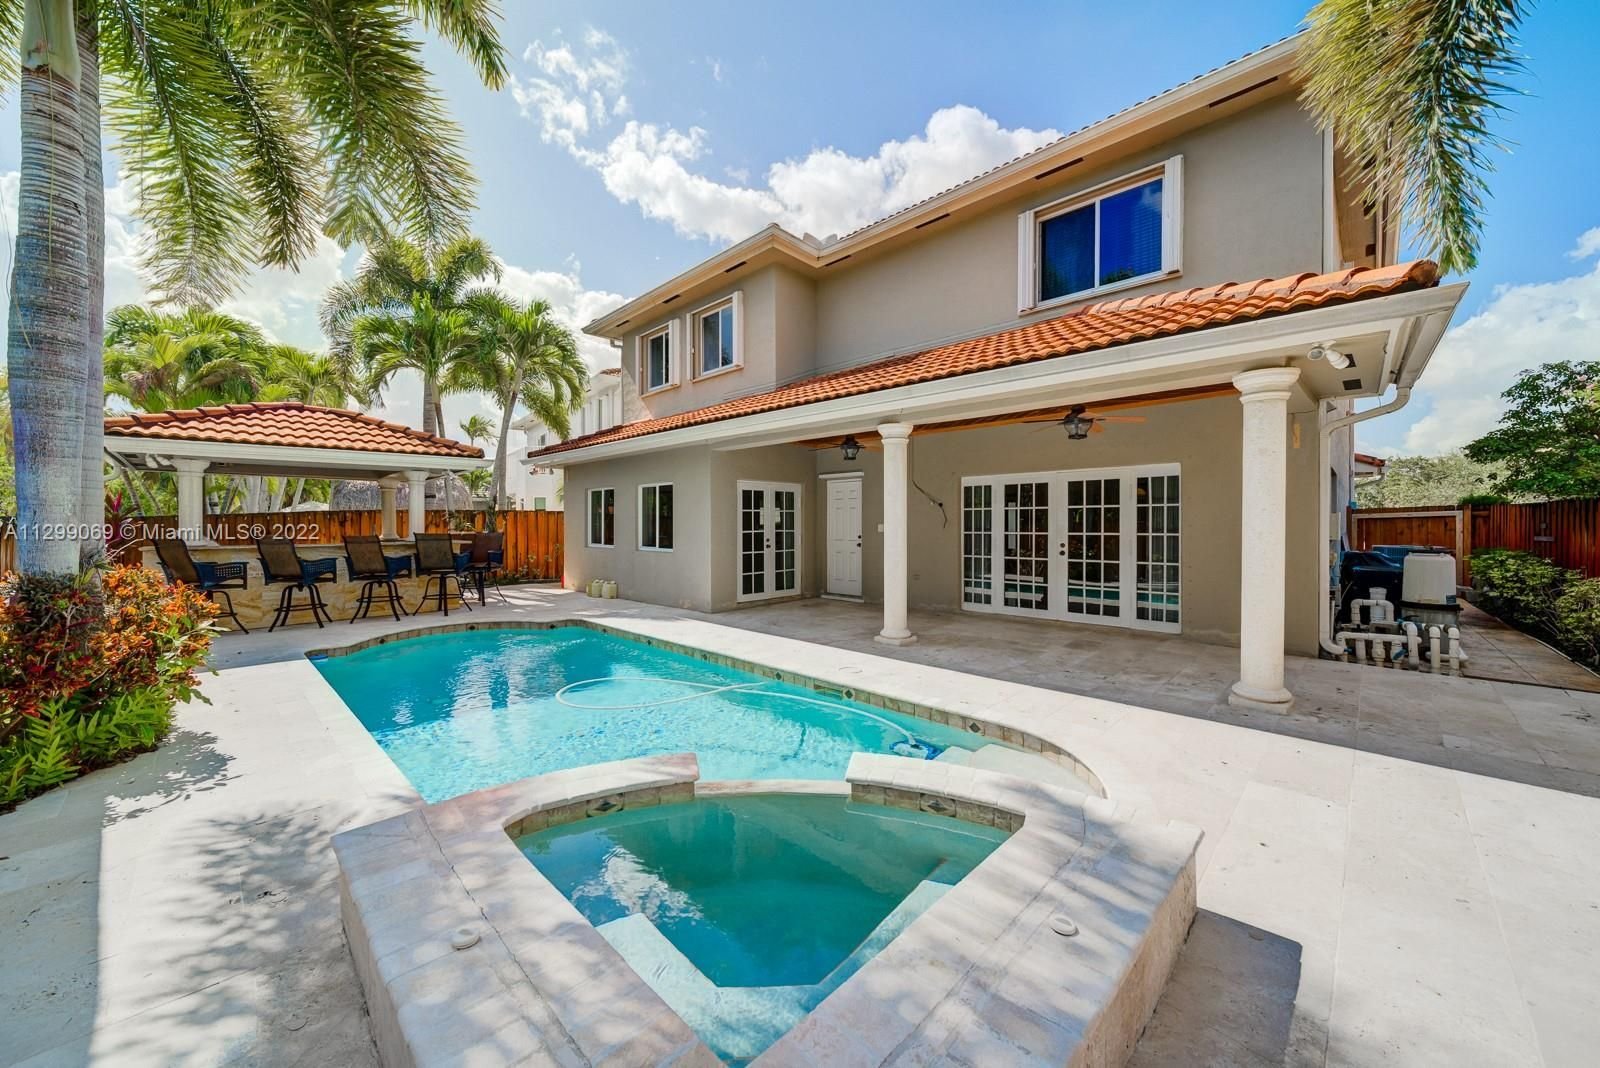 Real estate property located at 14201 130th Ave, Miami-Dade County, Miami, FL